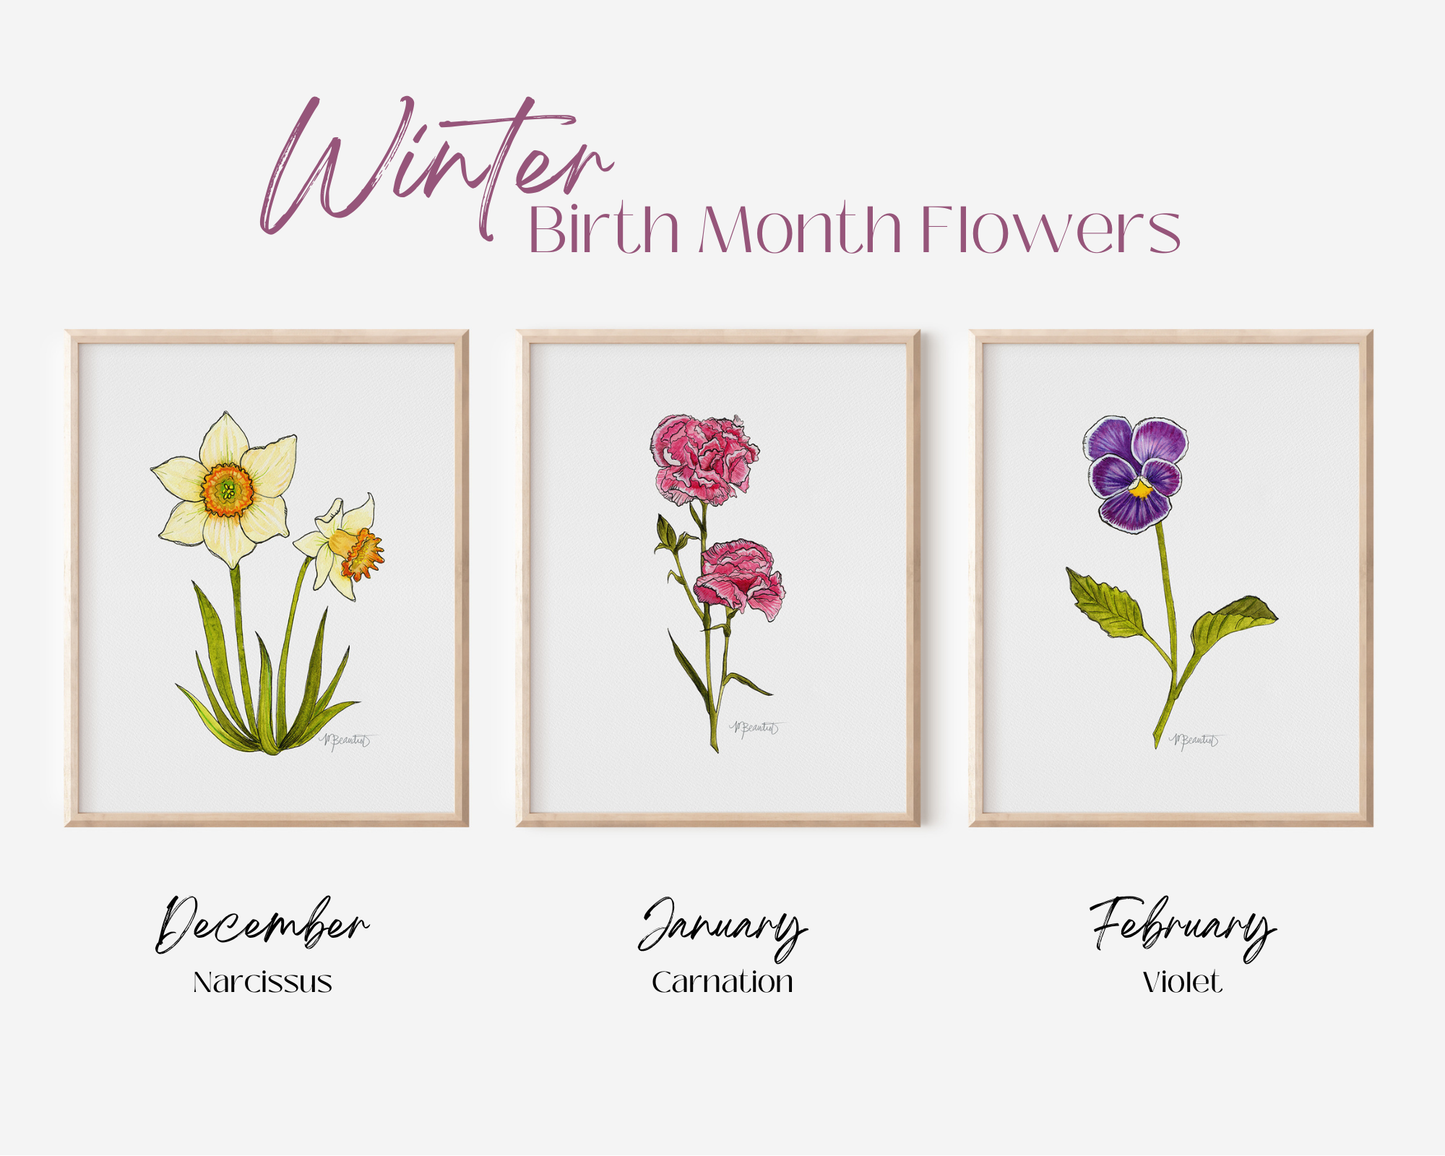 December Narcissus Flower Watercolor Birth Month Flower Botanical Art Print